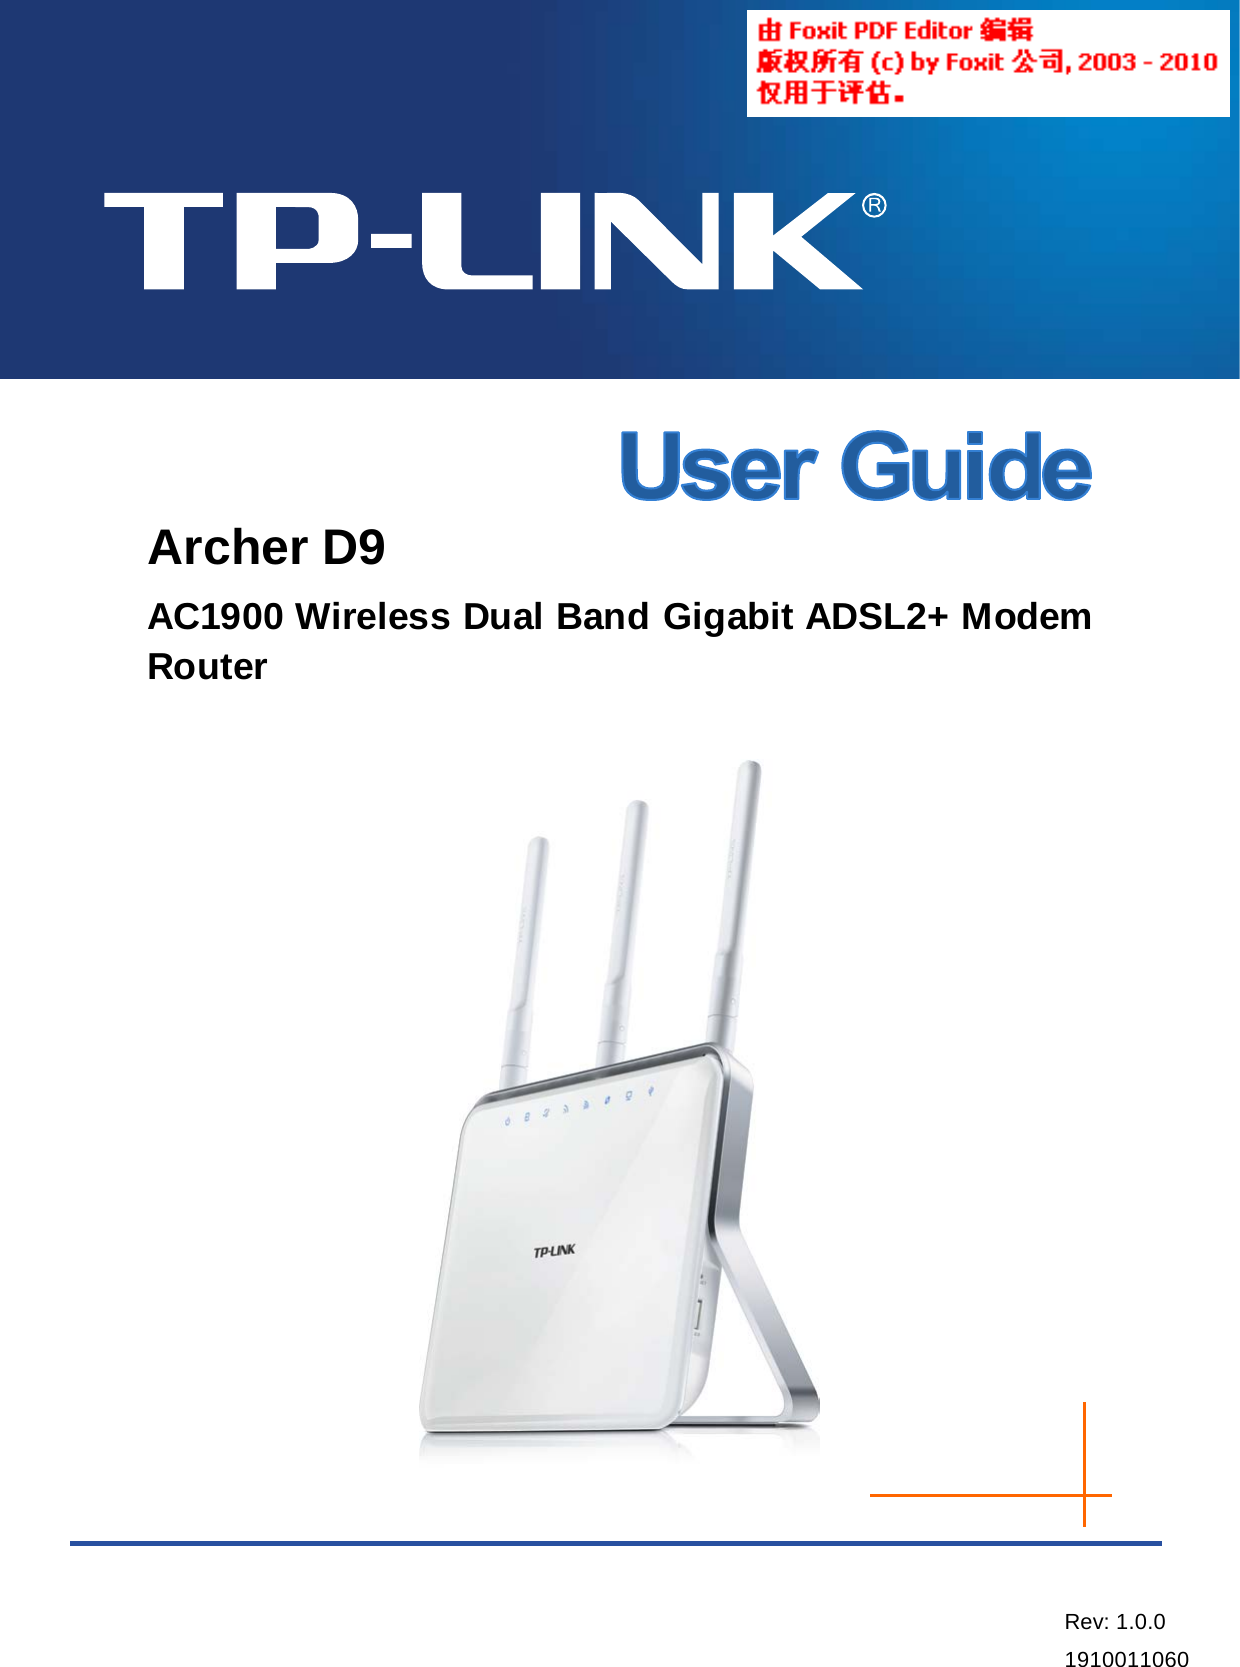   Archer D9 AC1900 Wireless Dual Band Gigabit ADSL2+ Modem Router  Rev: 1.0.0 1910011060  